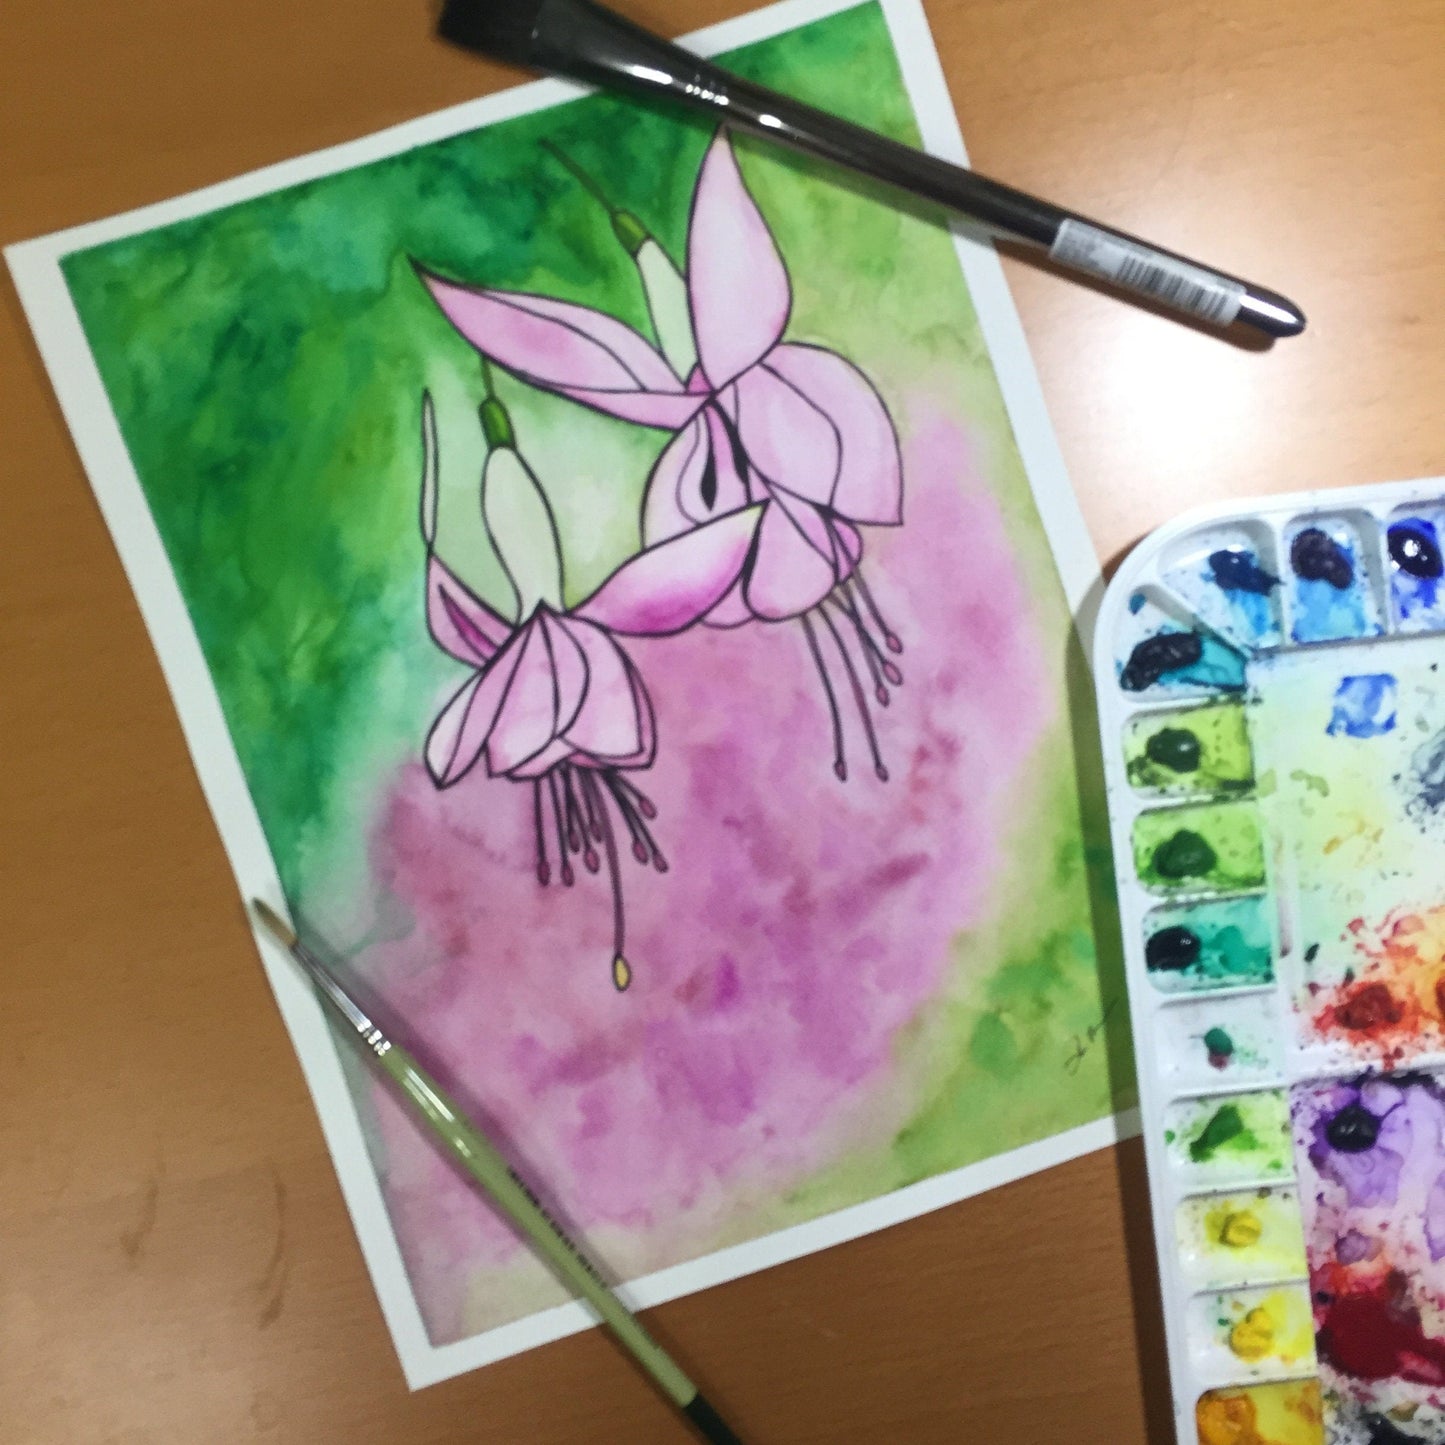 PinkPolish Design Original Art "Fuchsia" Flower Inspired Original Watercolor & Ink Illustration